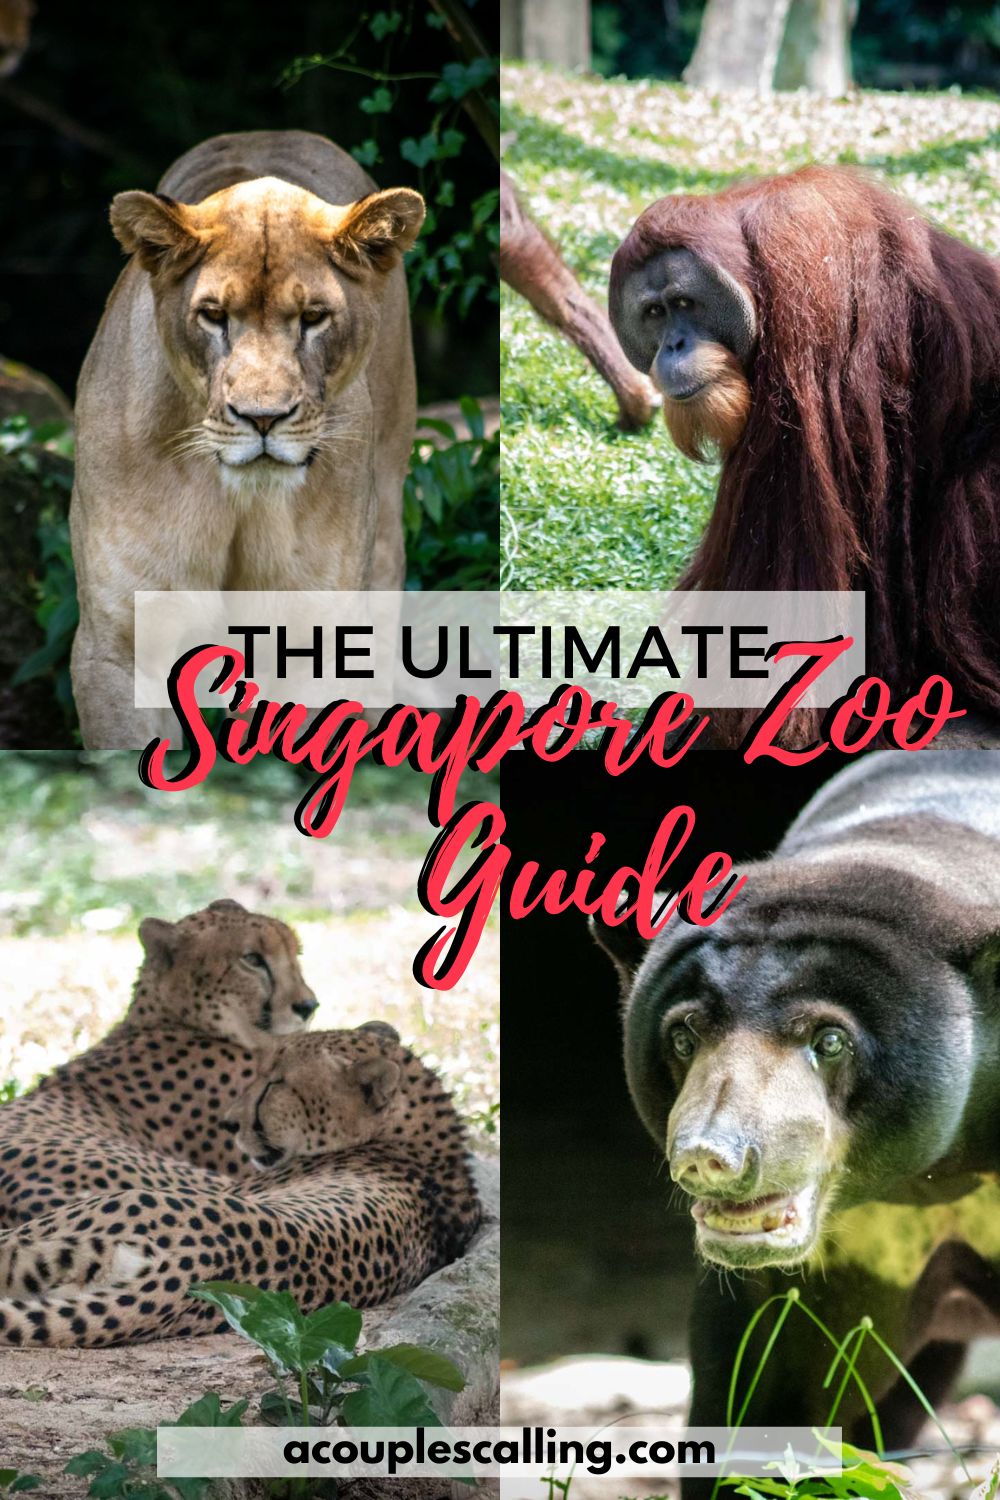 Singapore Zoo guide